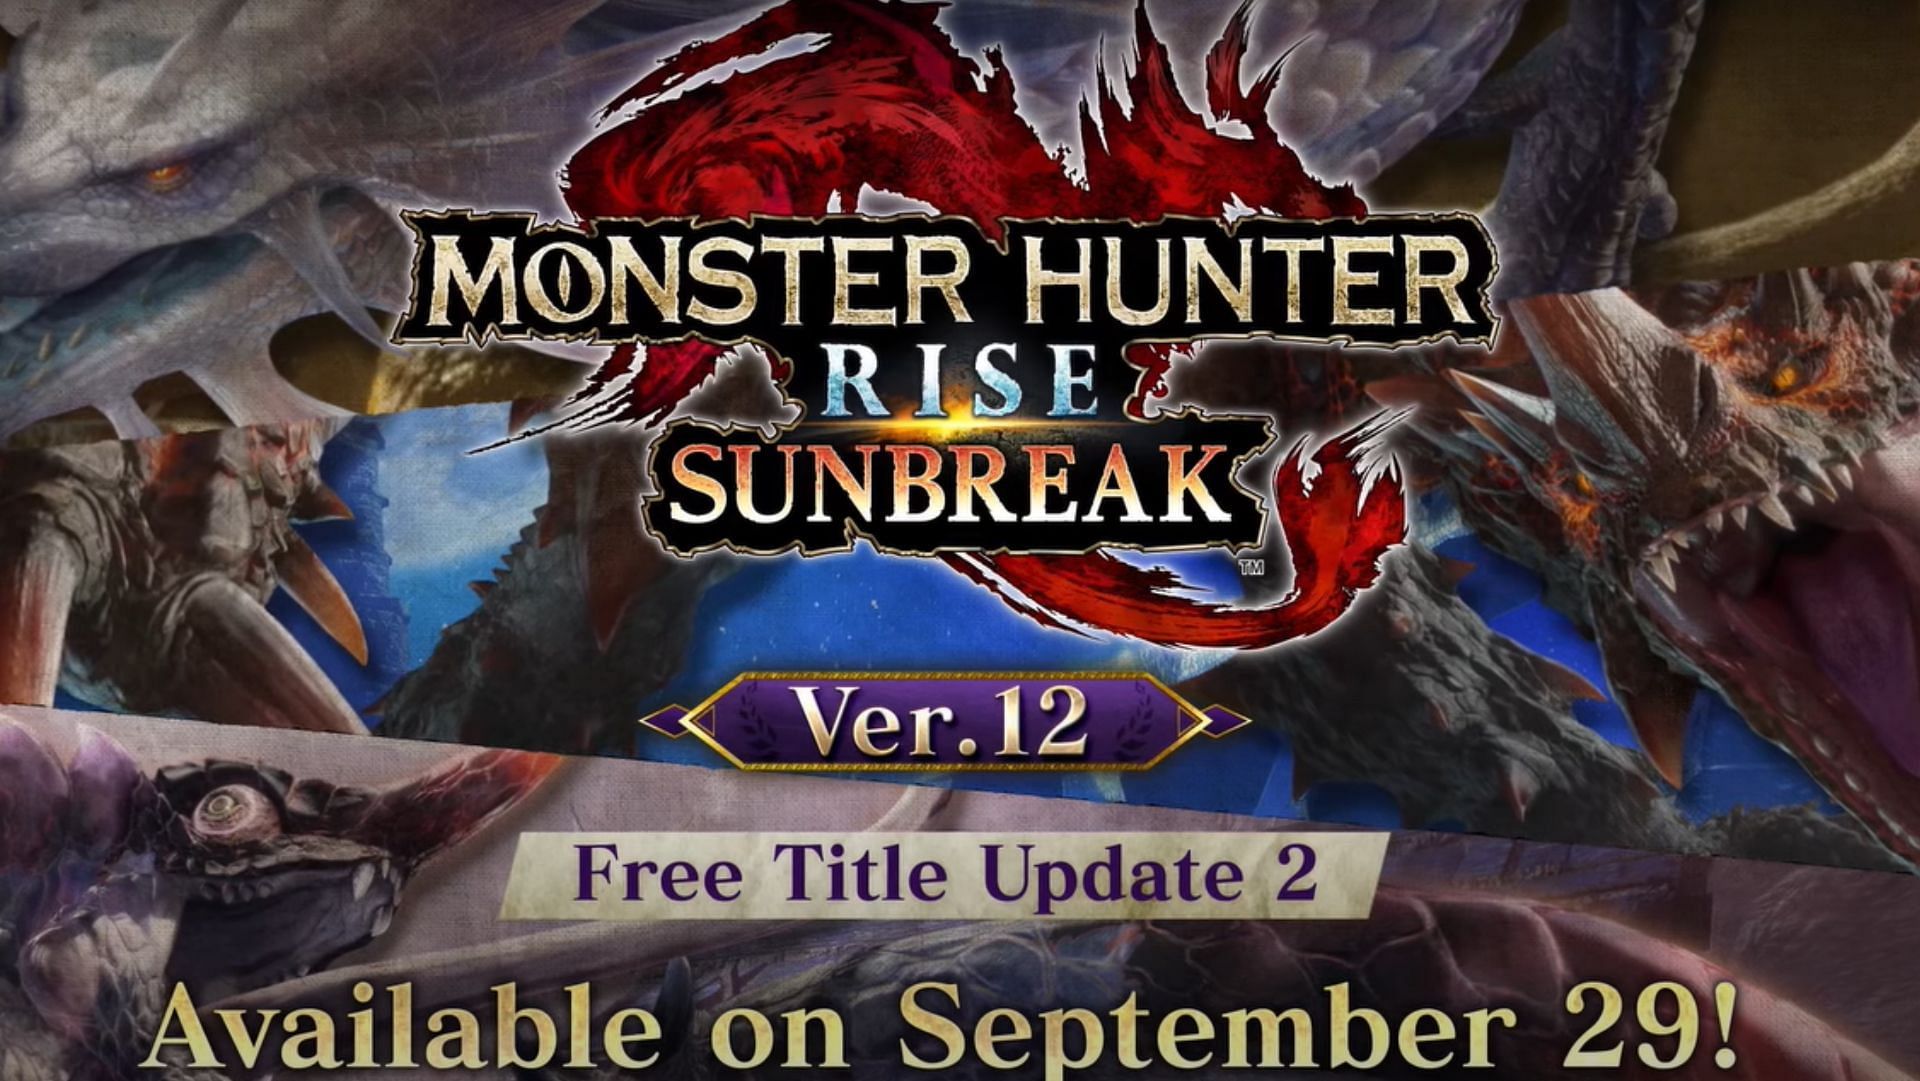 New details regarding the upcoming title update 2 for Monster Hunter Rise: Sunbreak has been revealed during TGS 2022 (Image via Capcom)